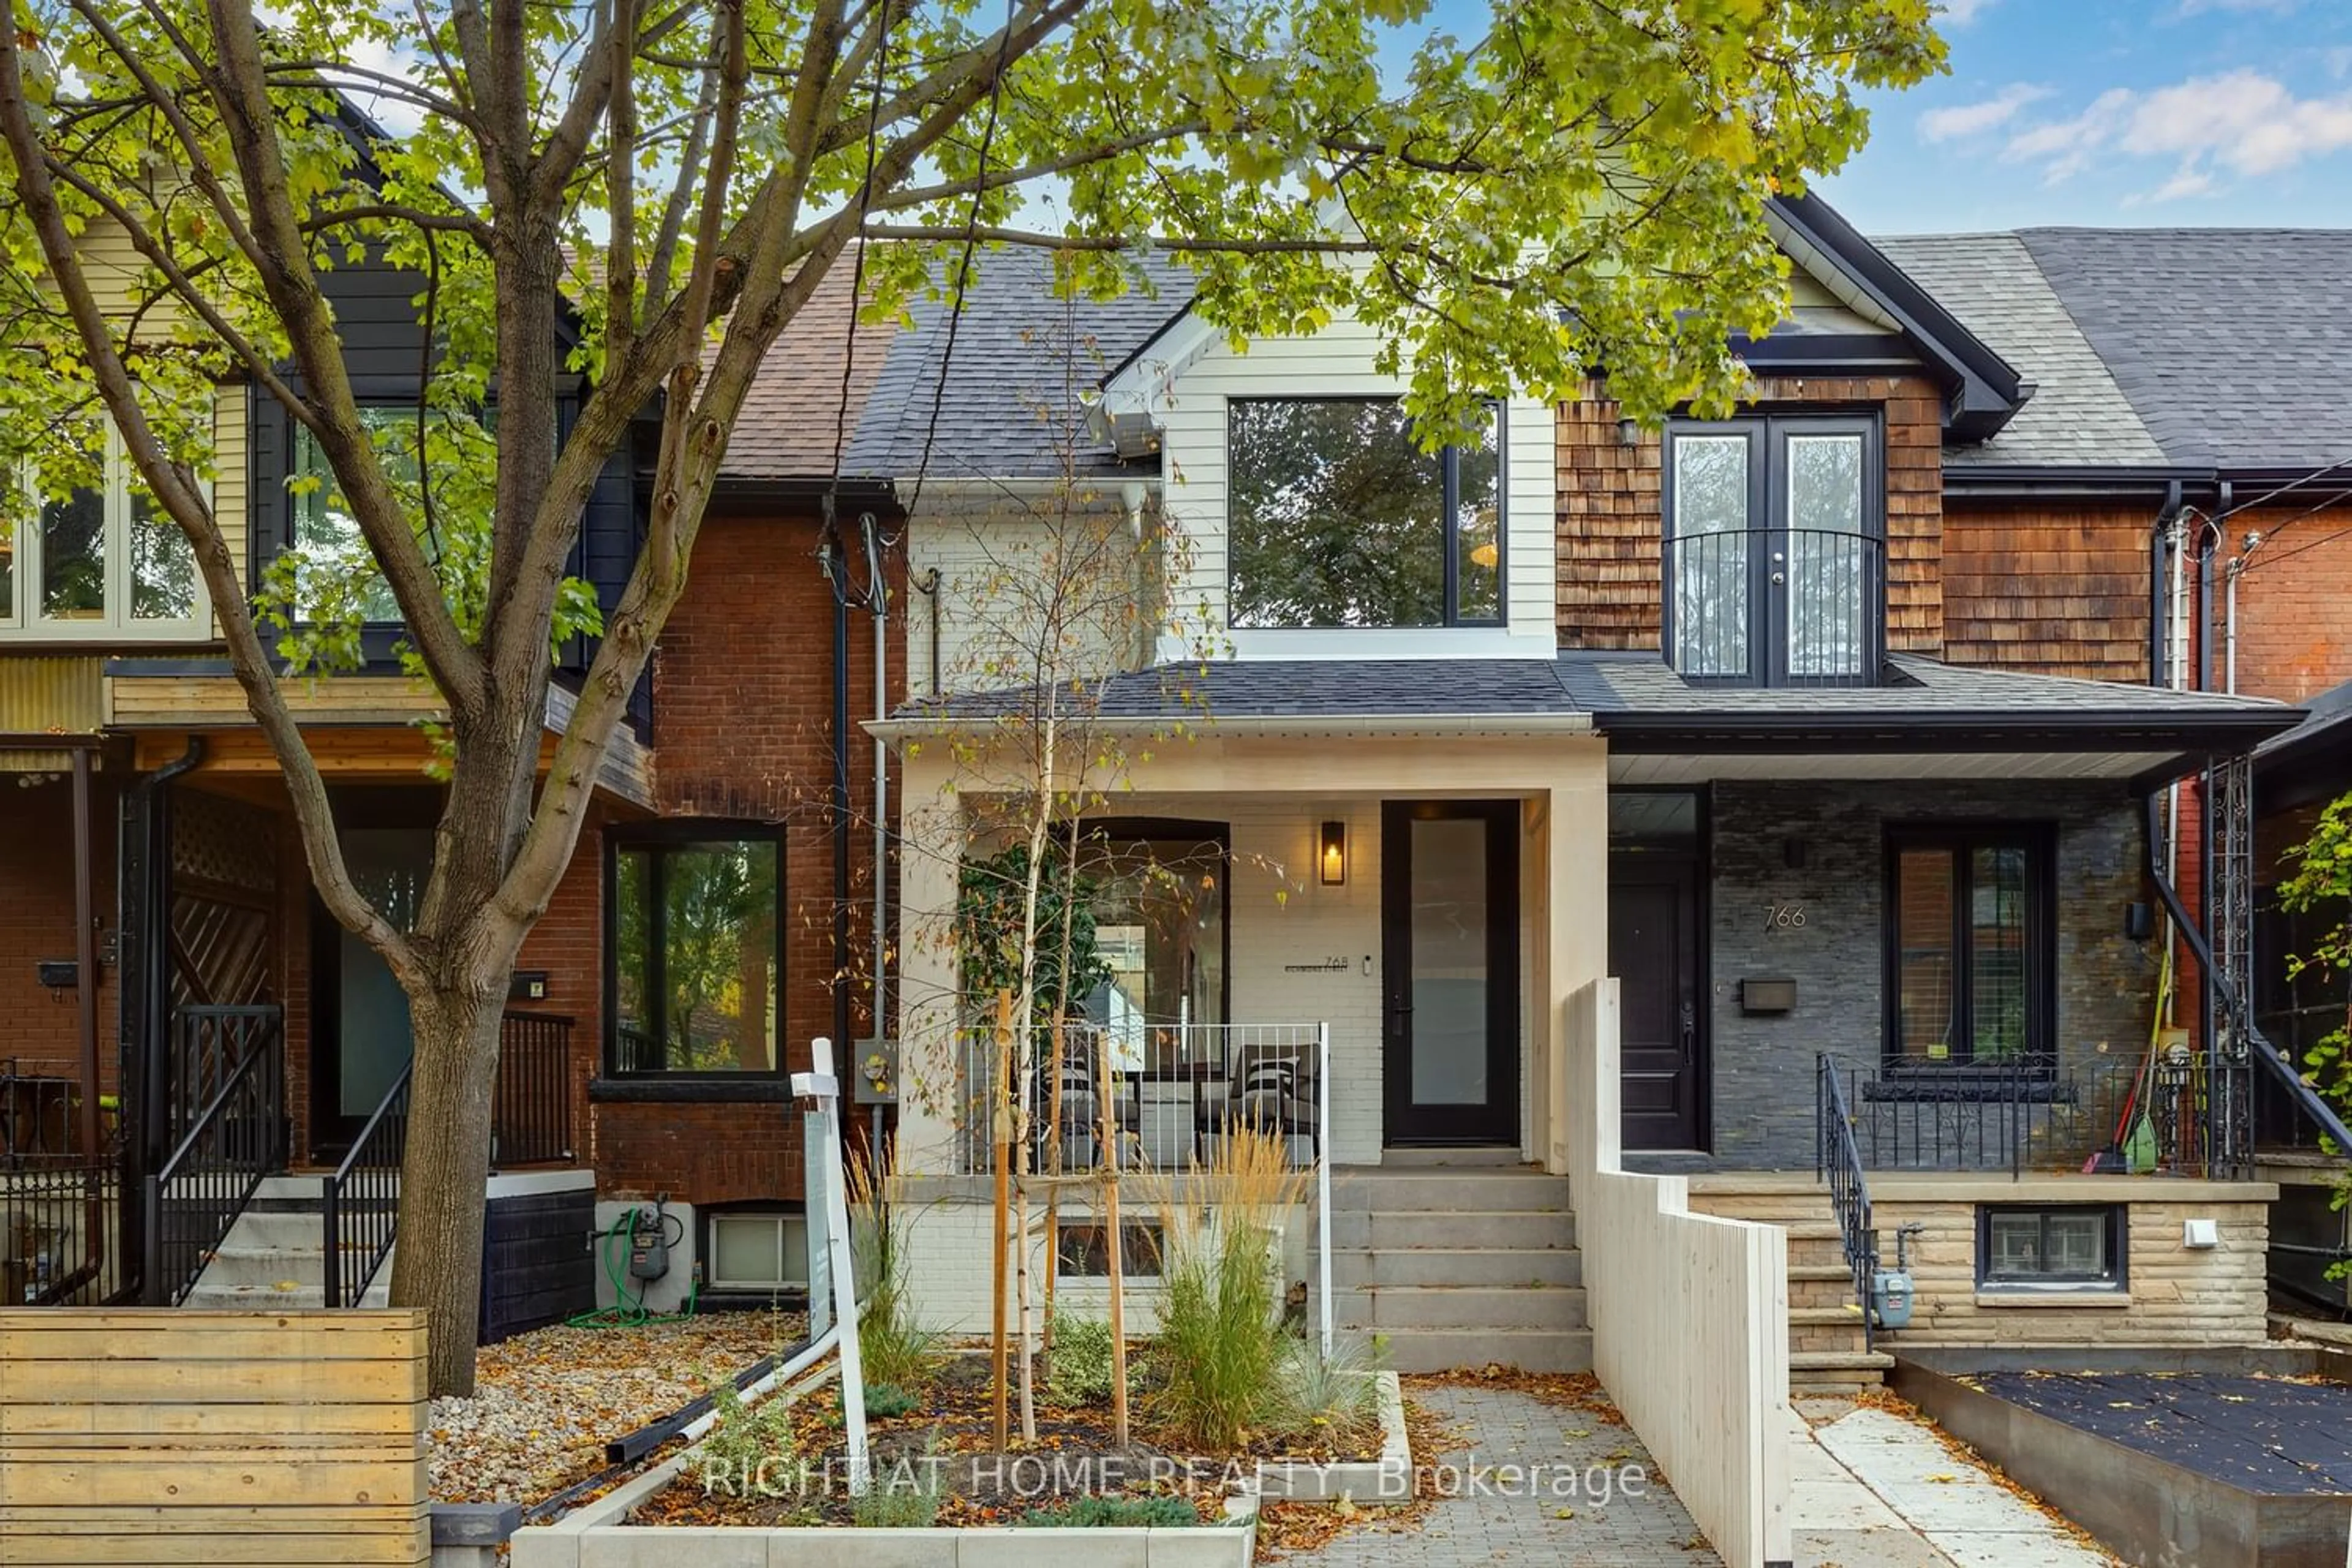 Home with brick exterior material for 768 Richmond St, Toronto Ontario M6J 1C5